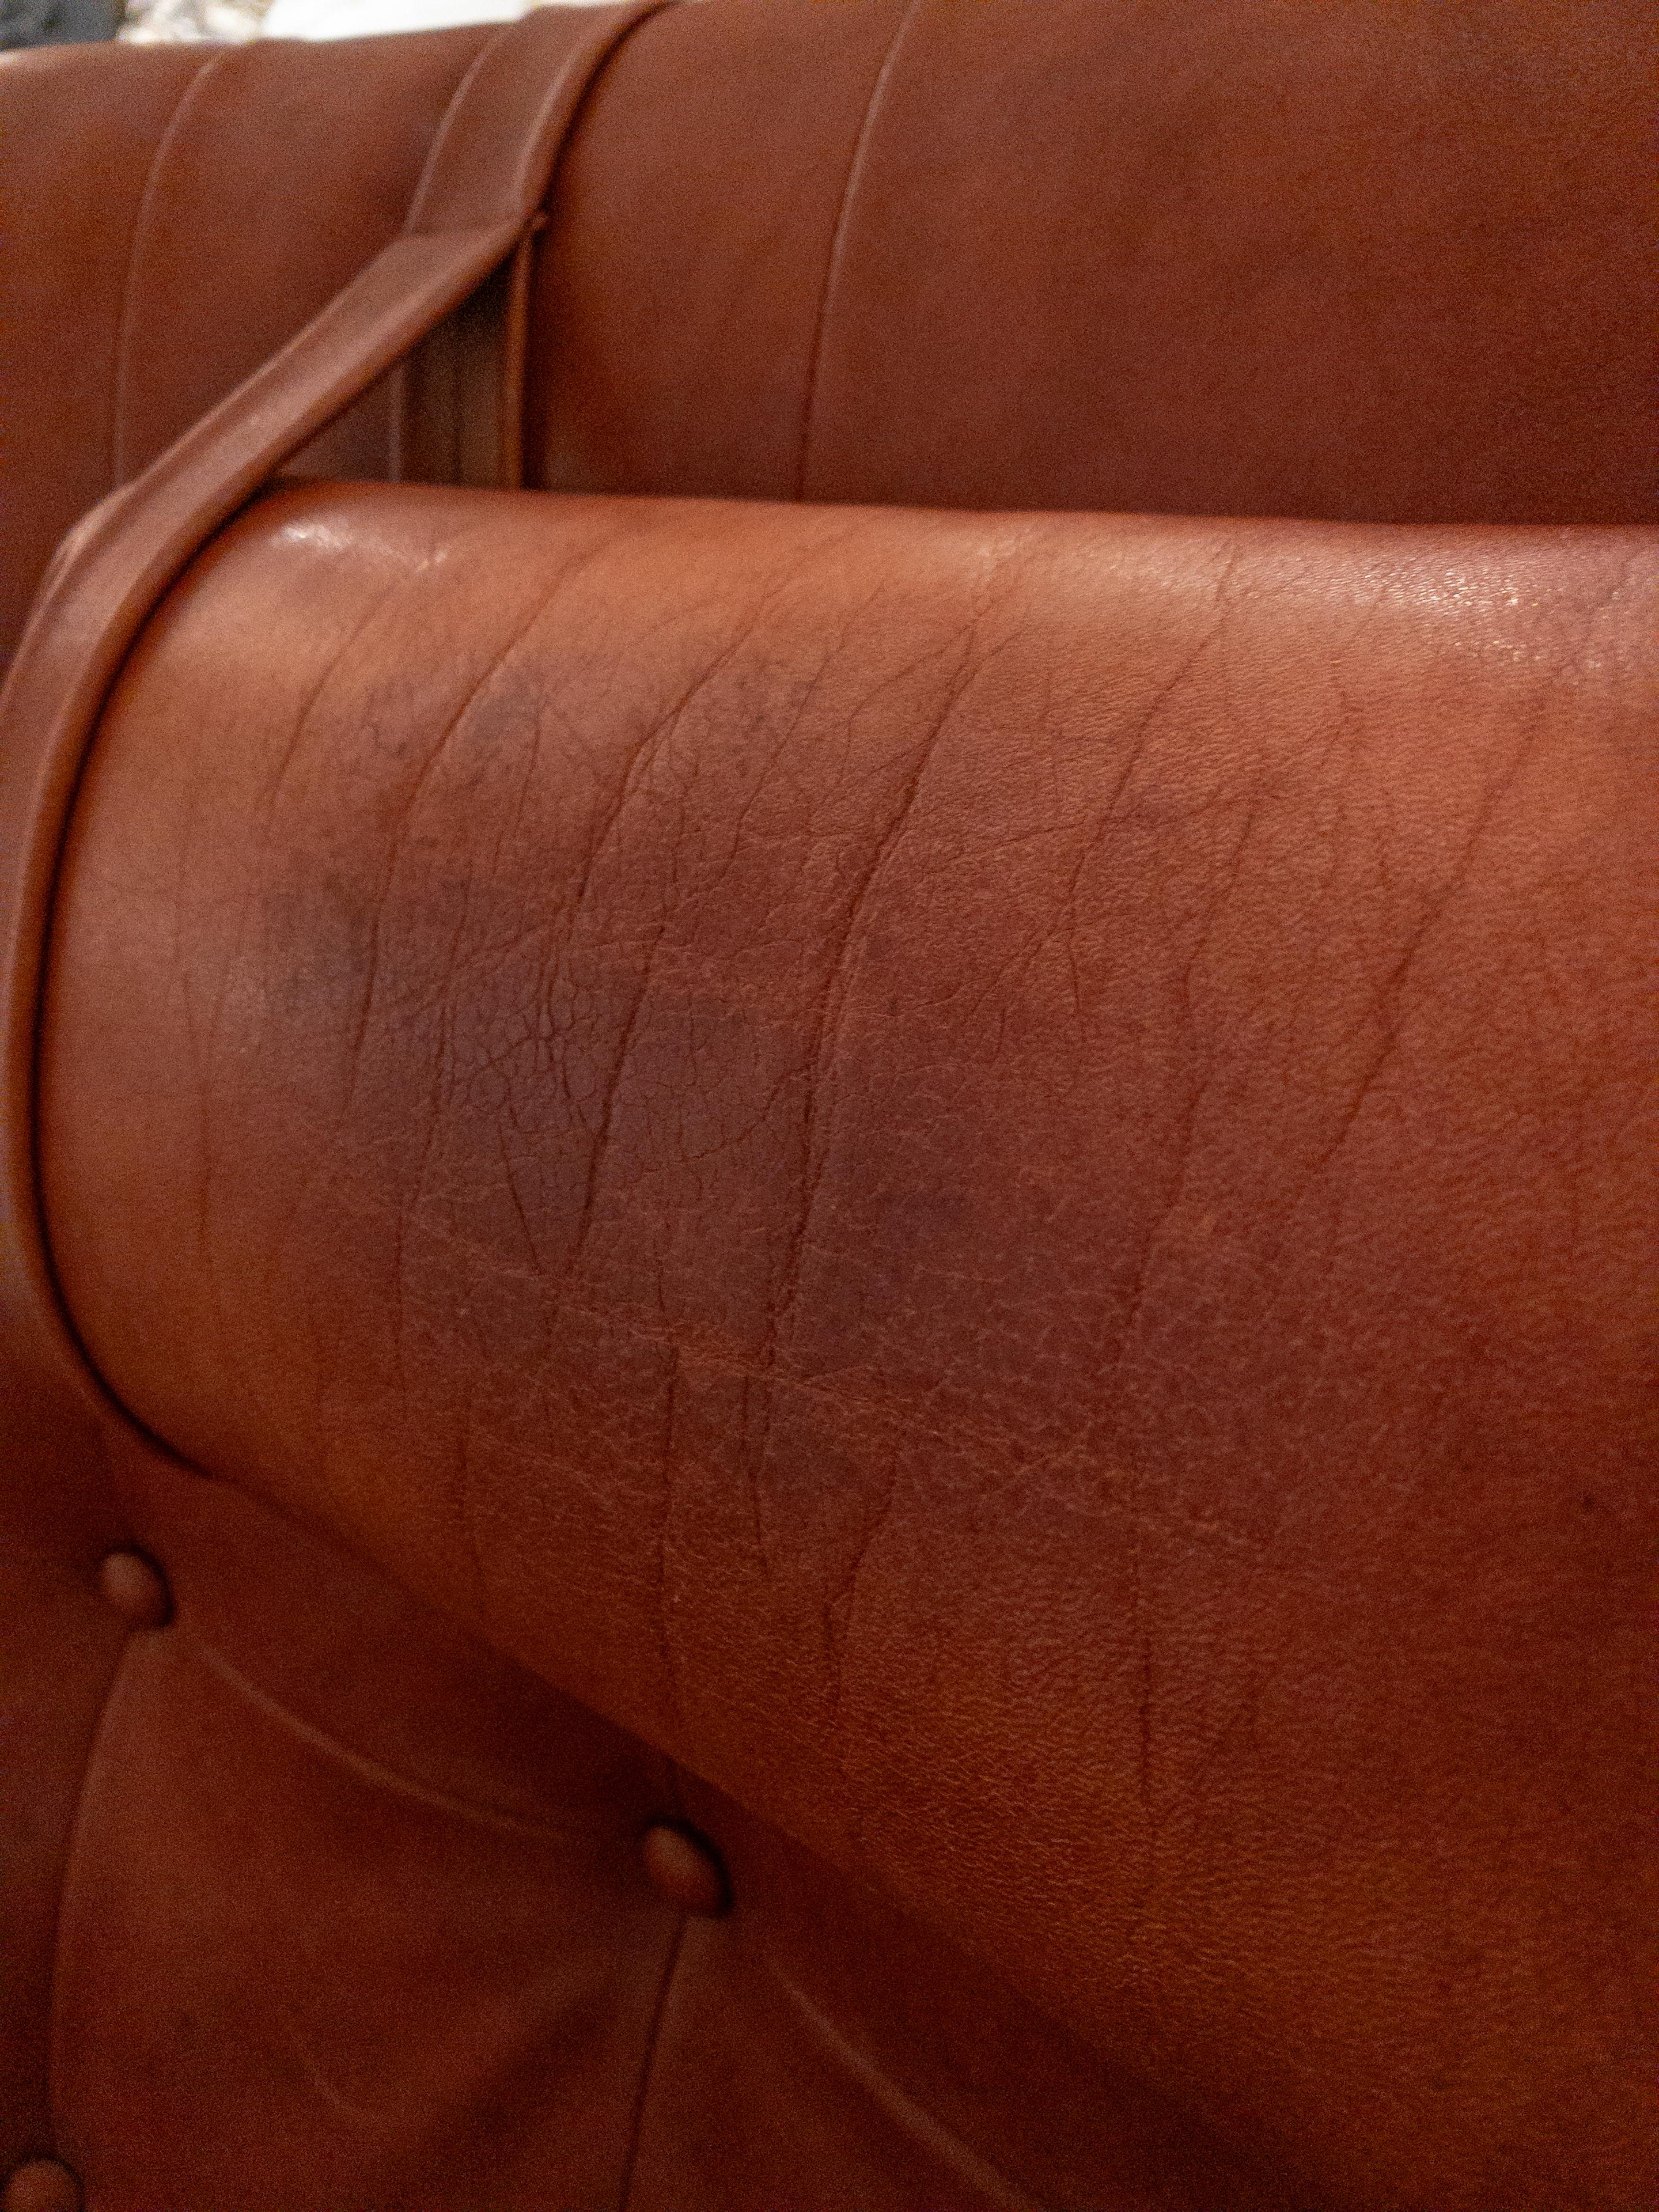 Tove & Edvard Kindt-Larsen Leather Lounge Chair For Sale 7